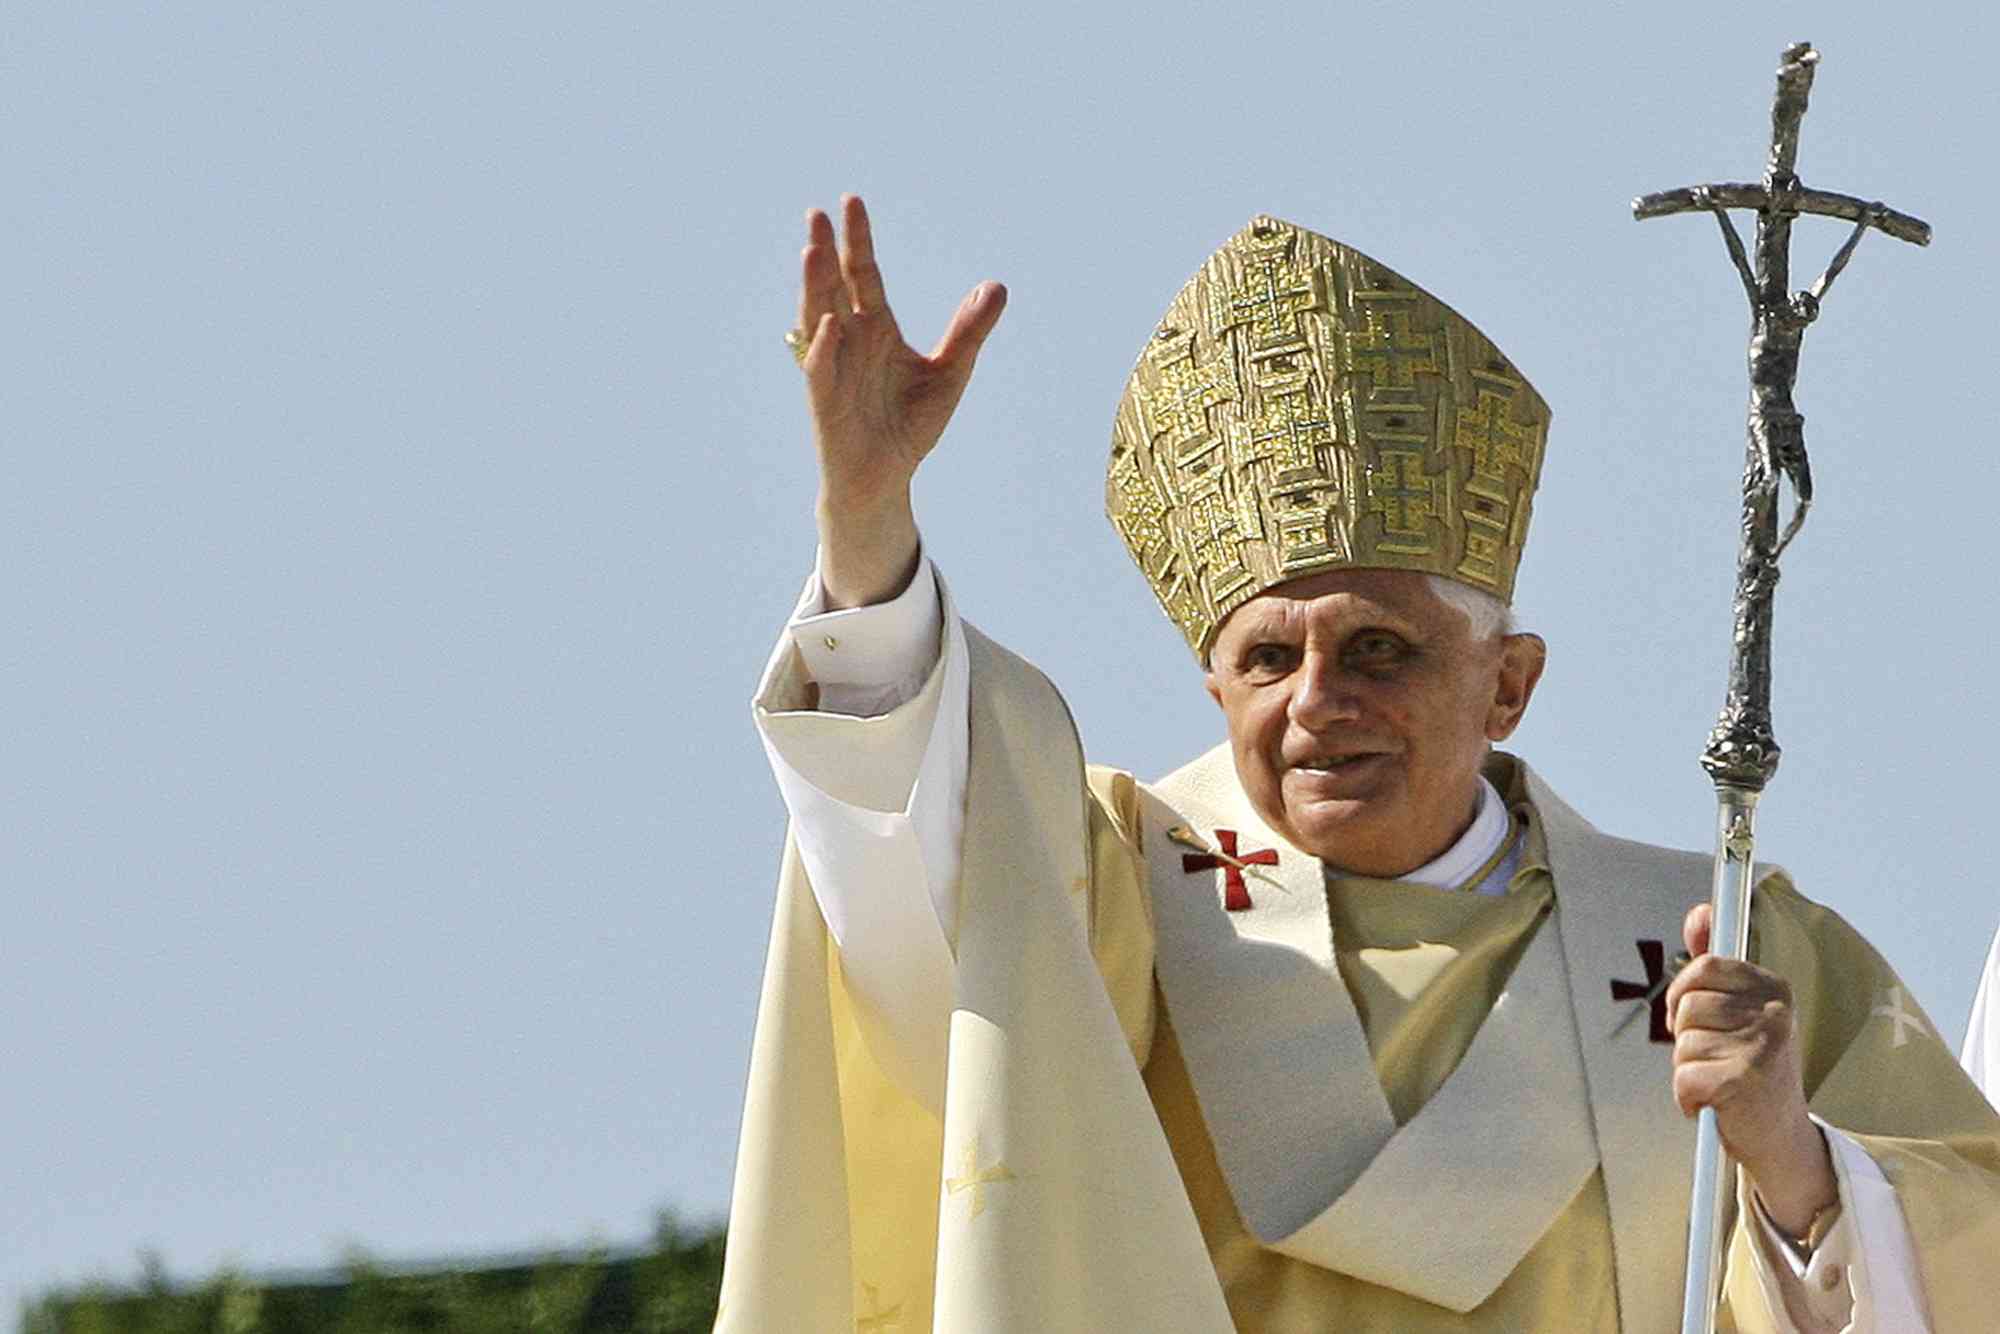 Papa Benedict XVI amezikwa